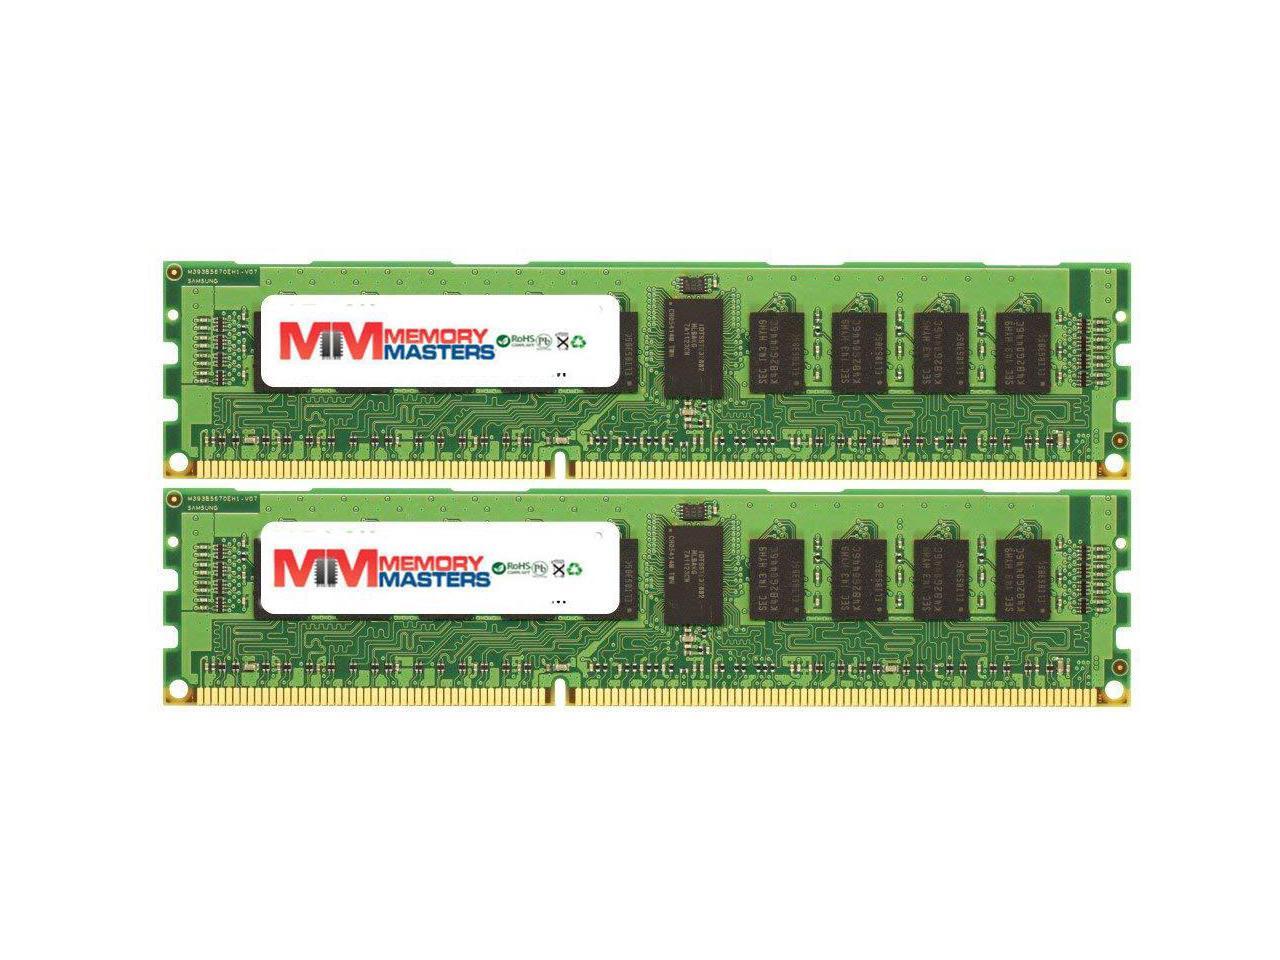 DDR3-1600MHz PC3-12800 ECC UDIMM 1Rx8 1.35V Unbuffered Memory for Server/Workstation MemoryMasters 32GB 8x4GB